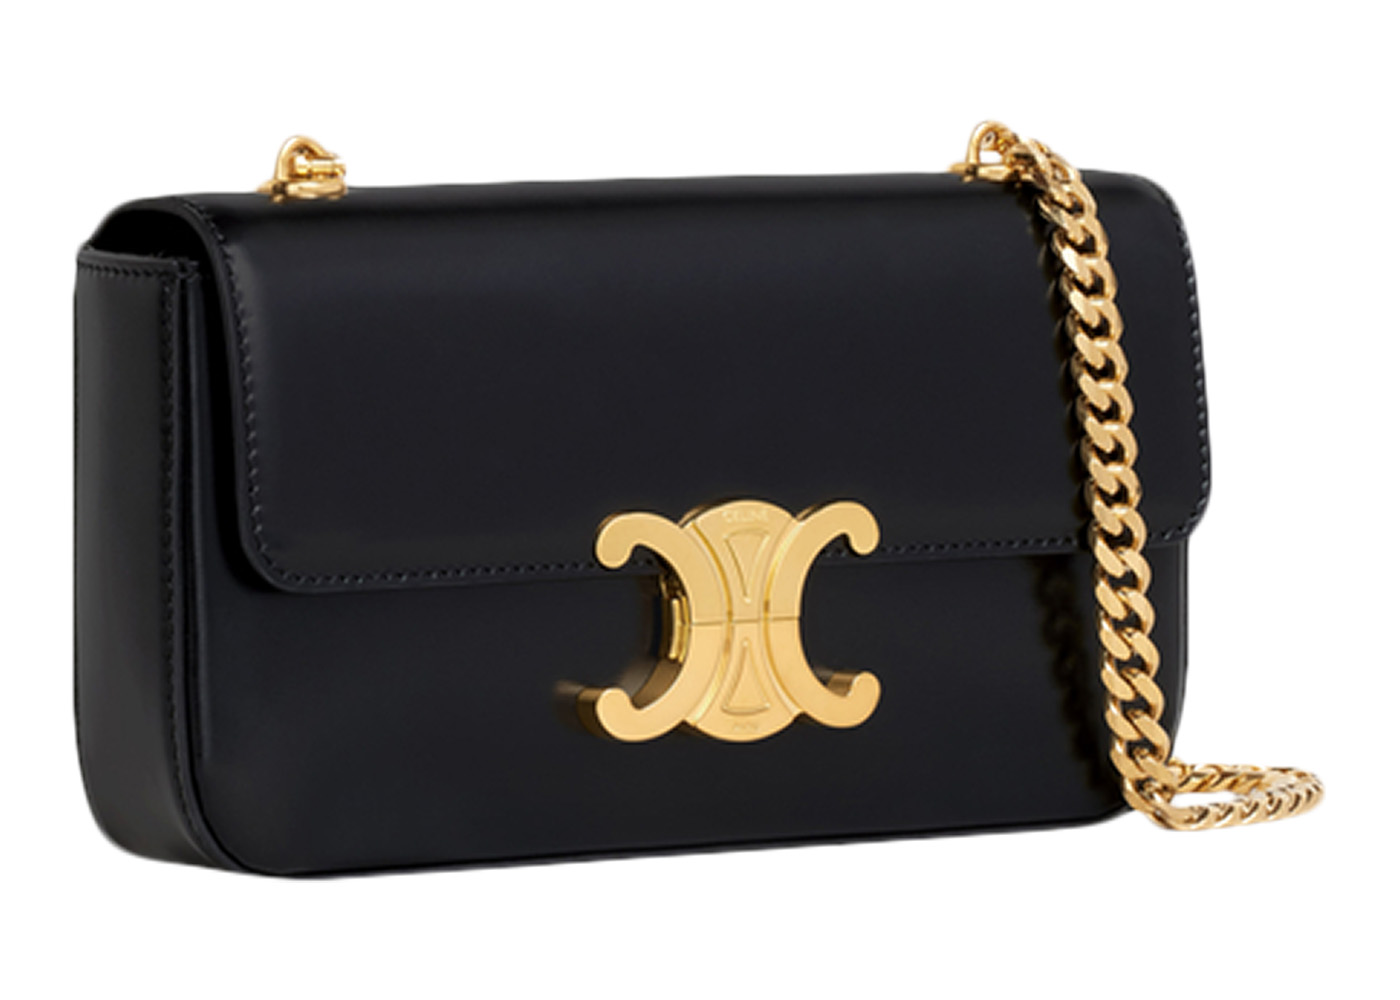 Celine Triomphe Chain Shoulder Bag Black in Shiny Calfskin Leather ...